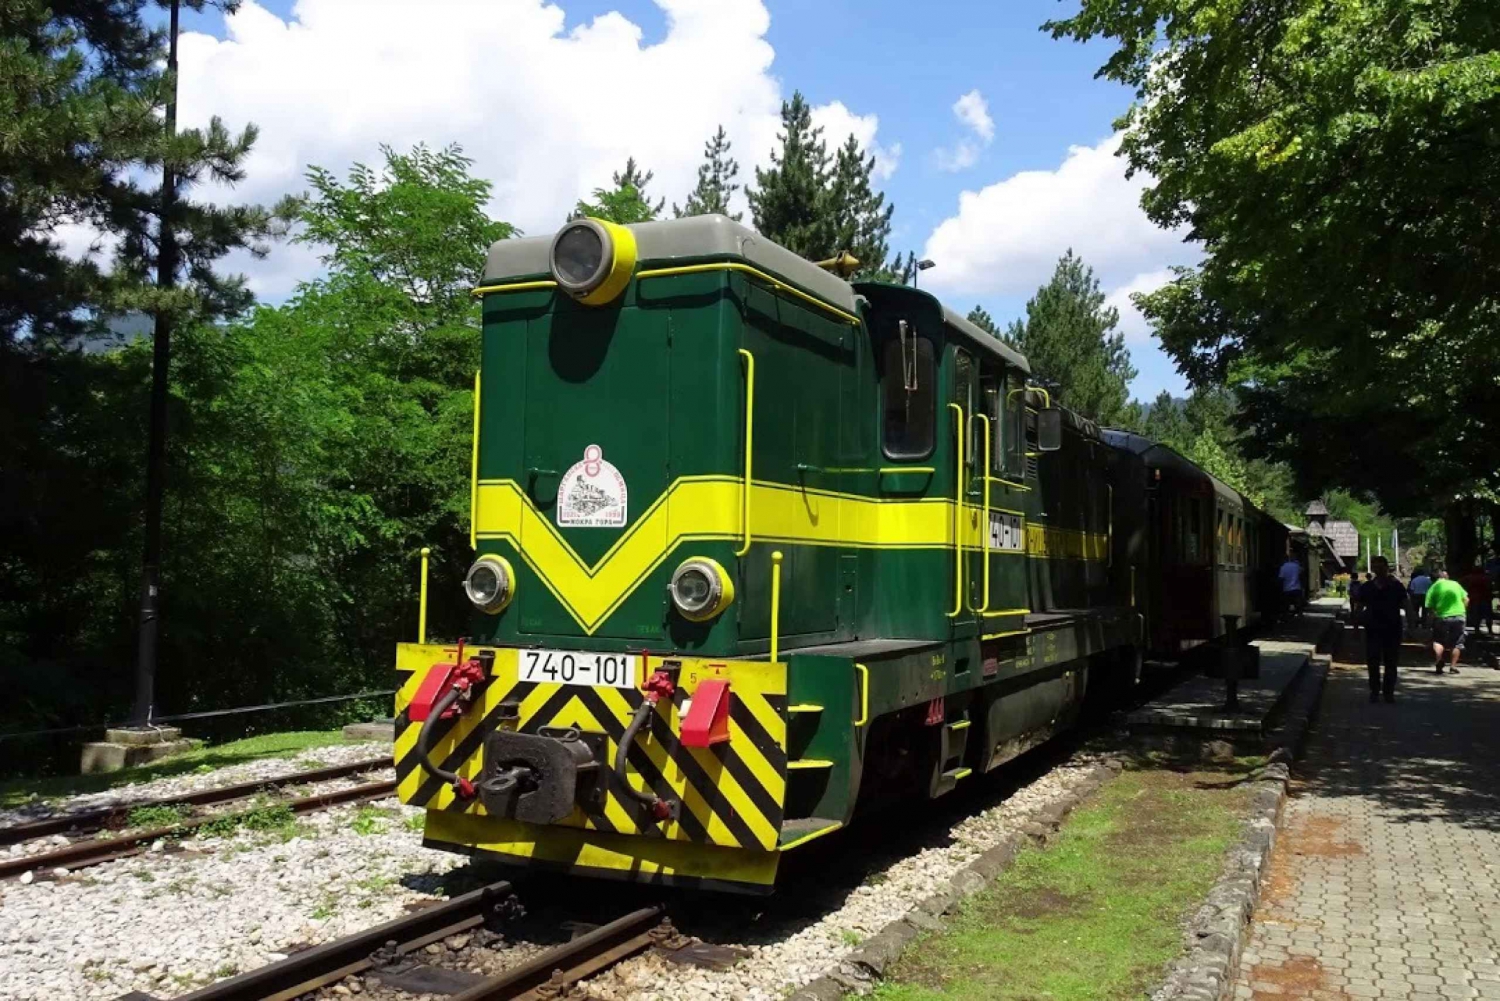 From Belgrade: Drina River House, Sargan 8 Train & Drvengrad